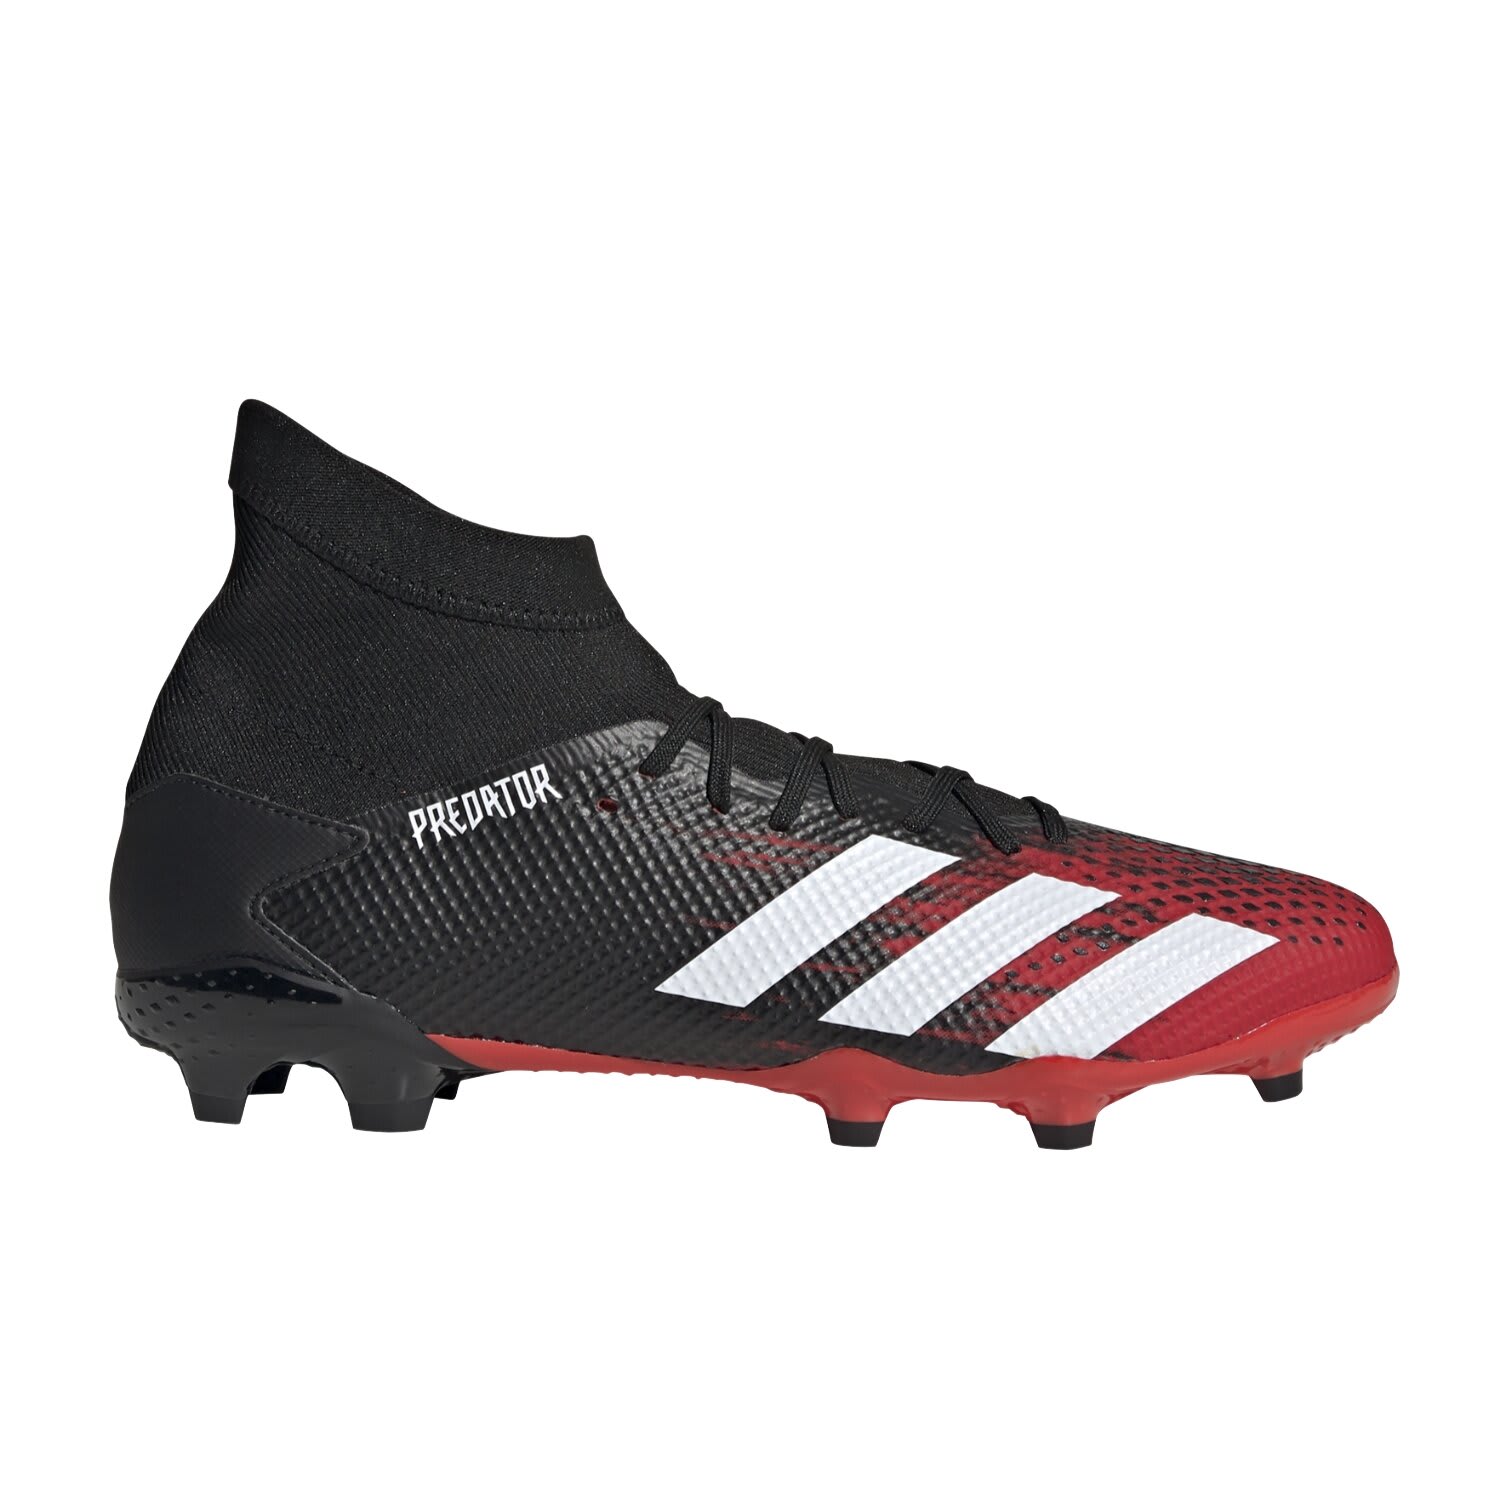 adidas predator soccer boots 